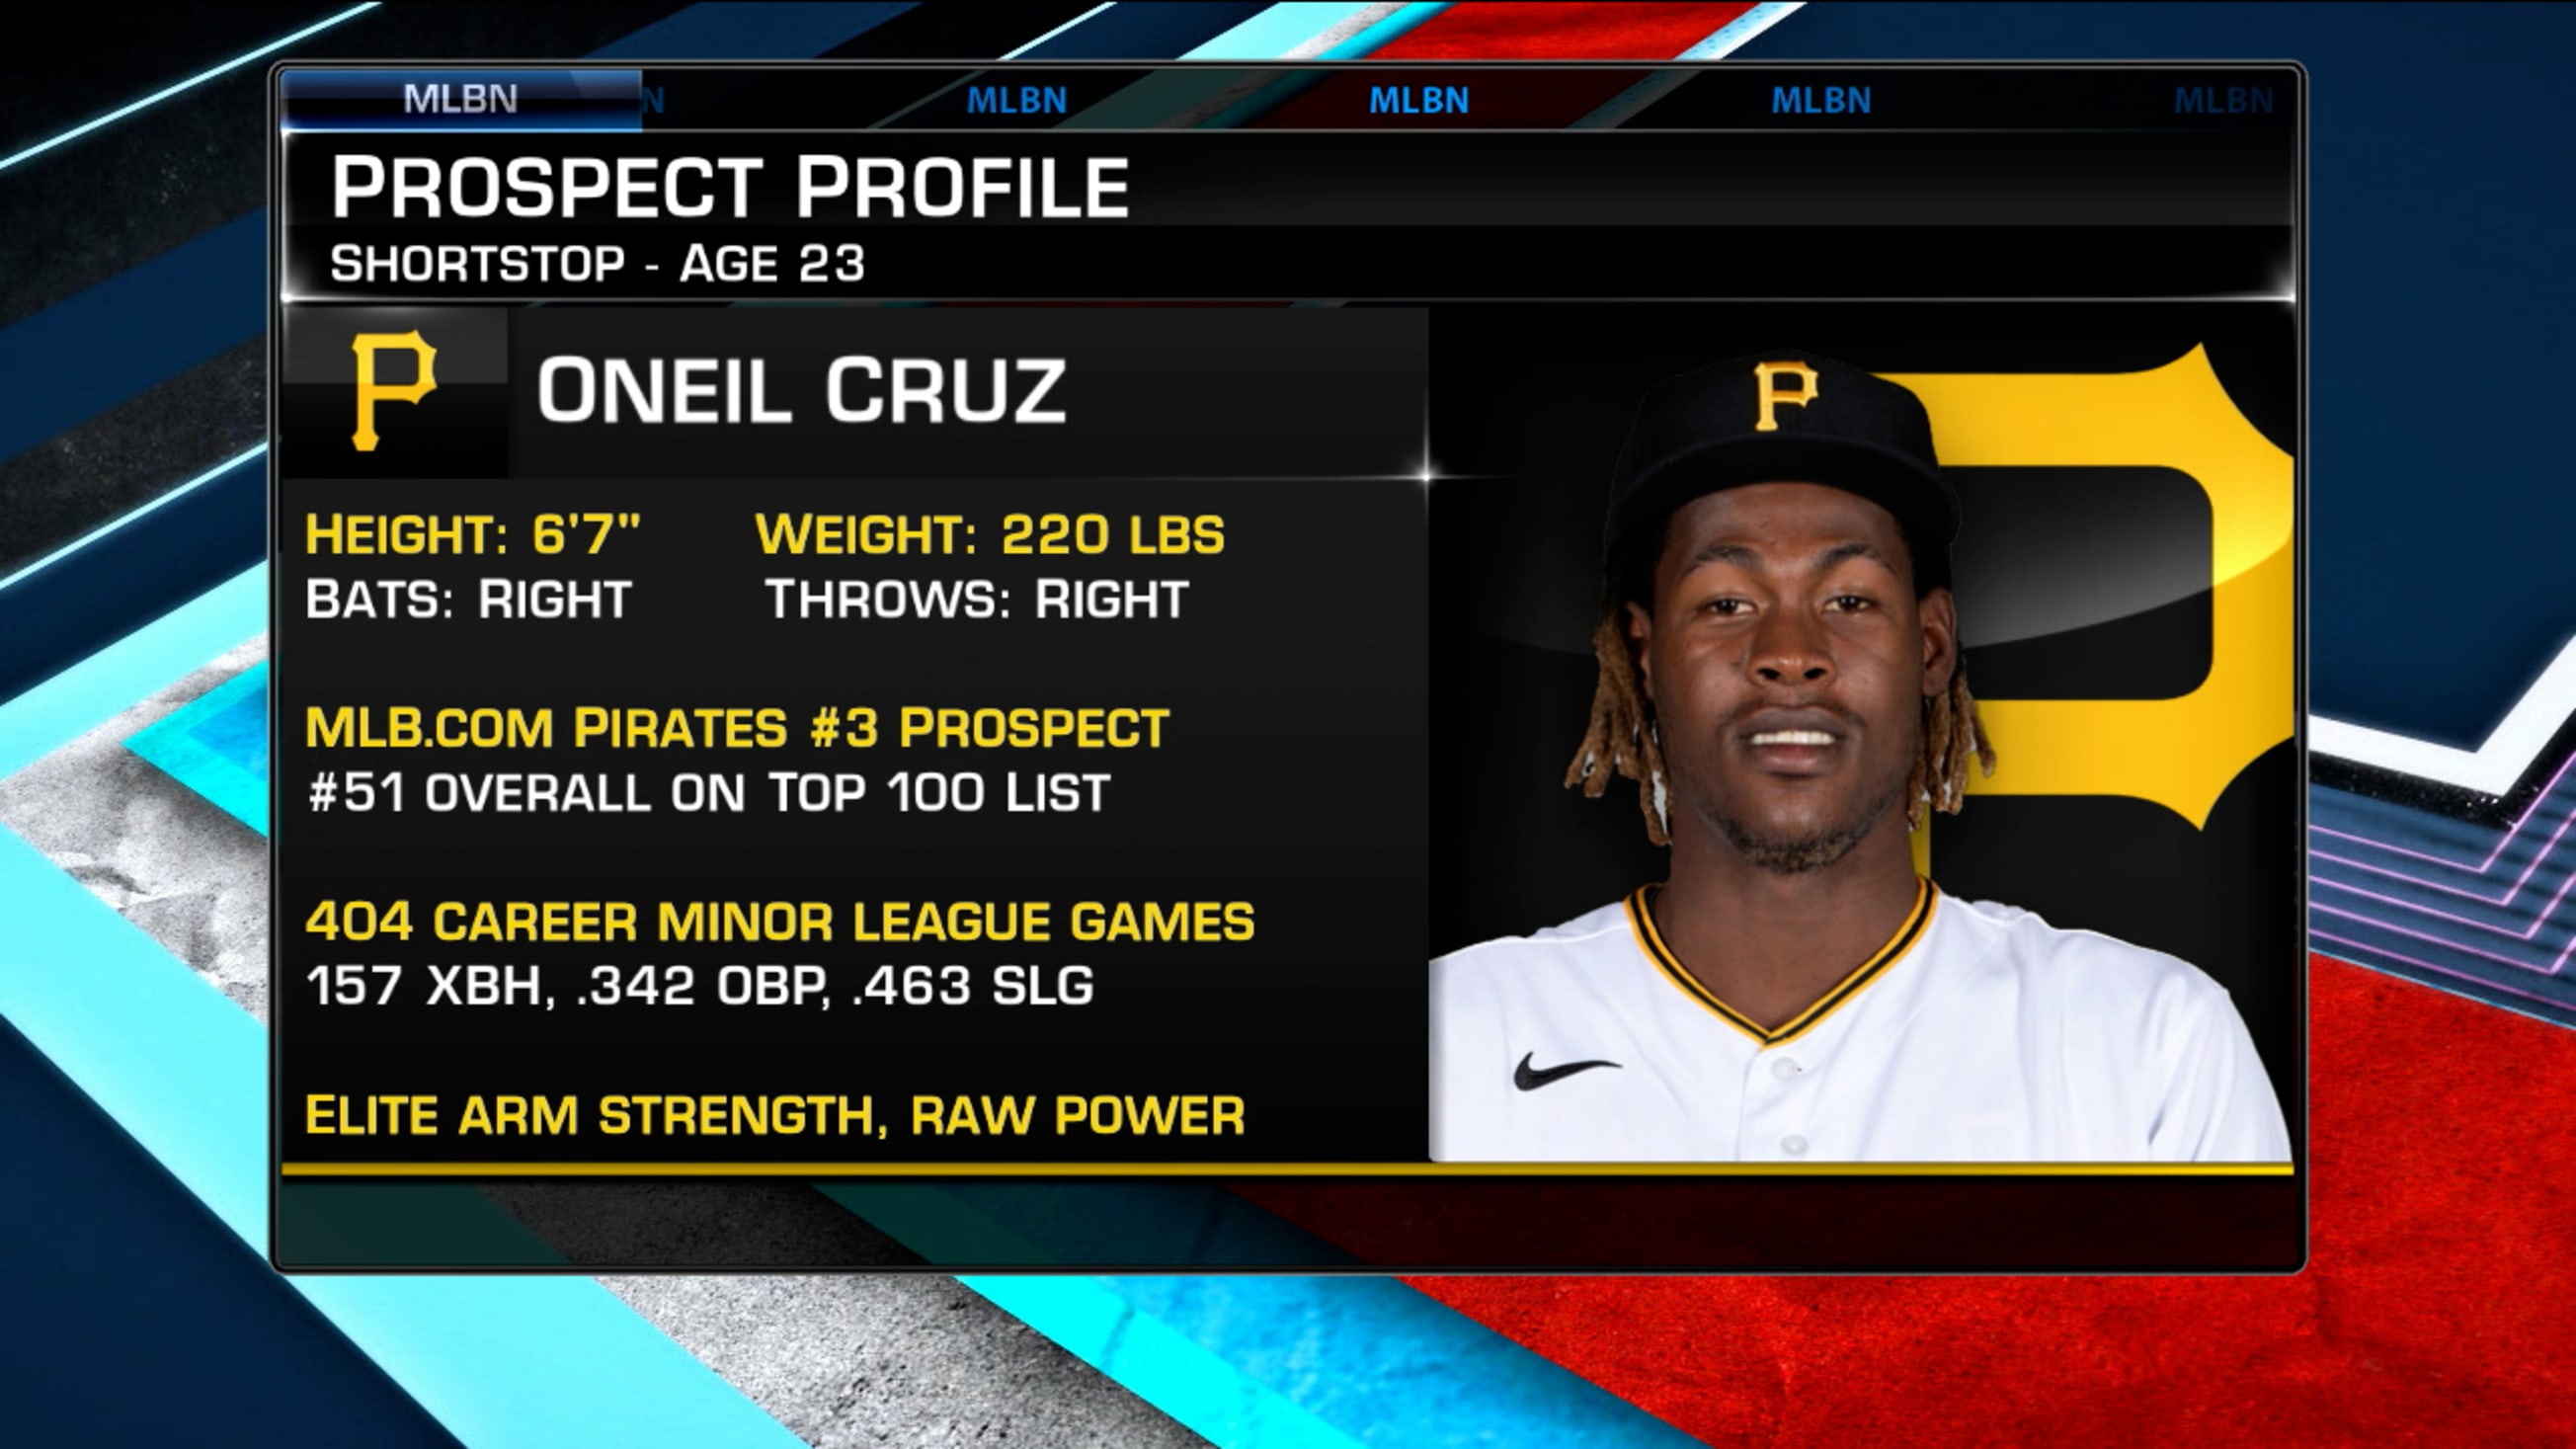 Oneil Cruz is the first 6-foot-7 shortstop you've ever seen. He